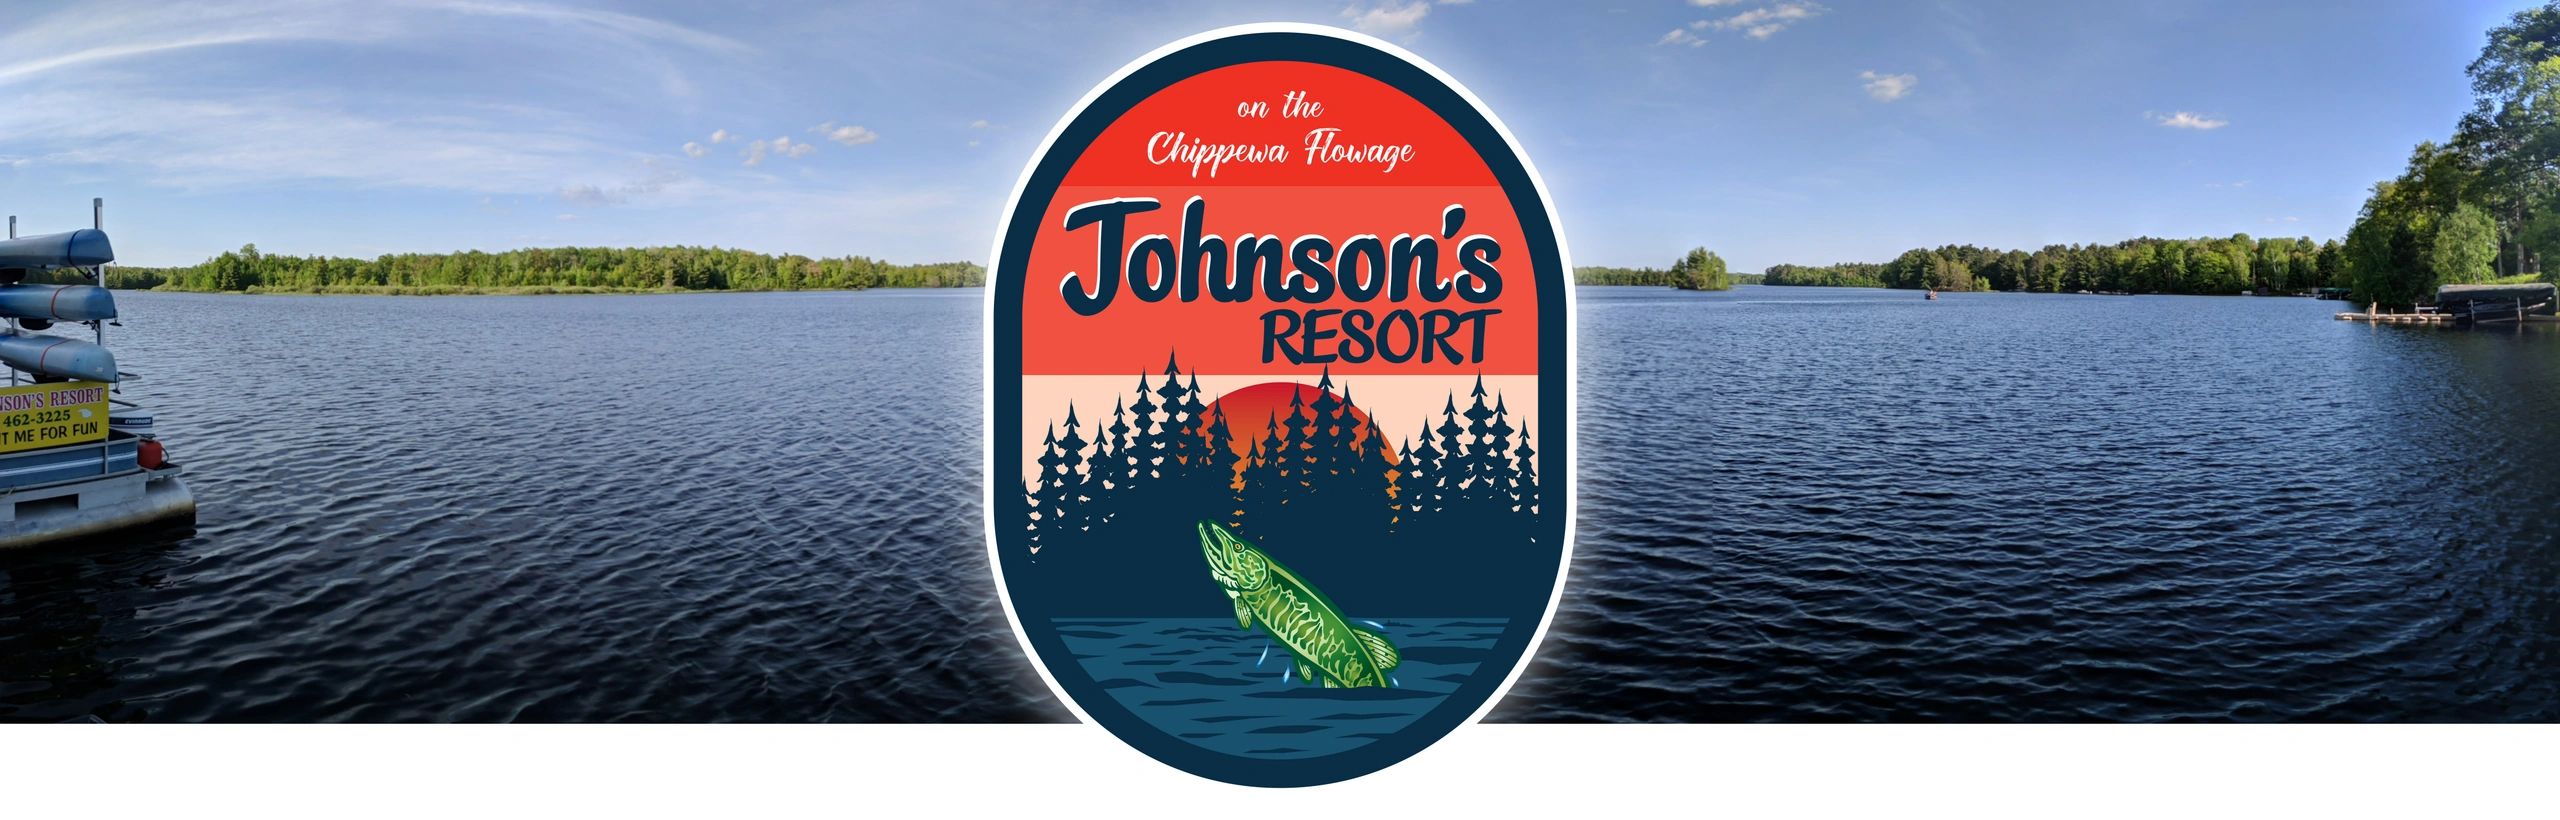 Johnson's Resort logo and photo from Johnson's Resort of the Chippewa Flowage